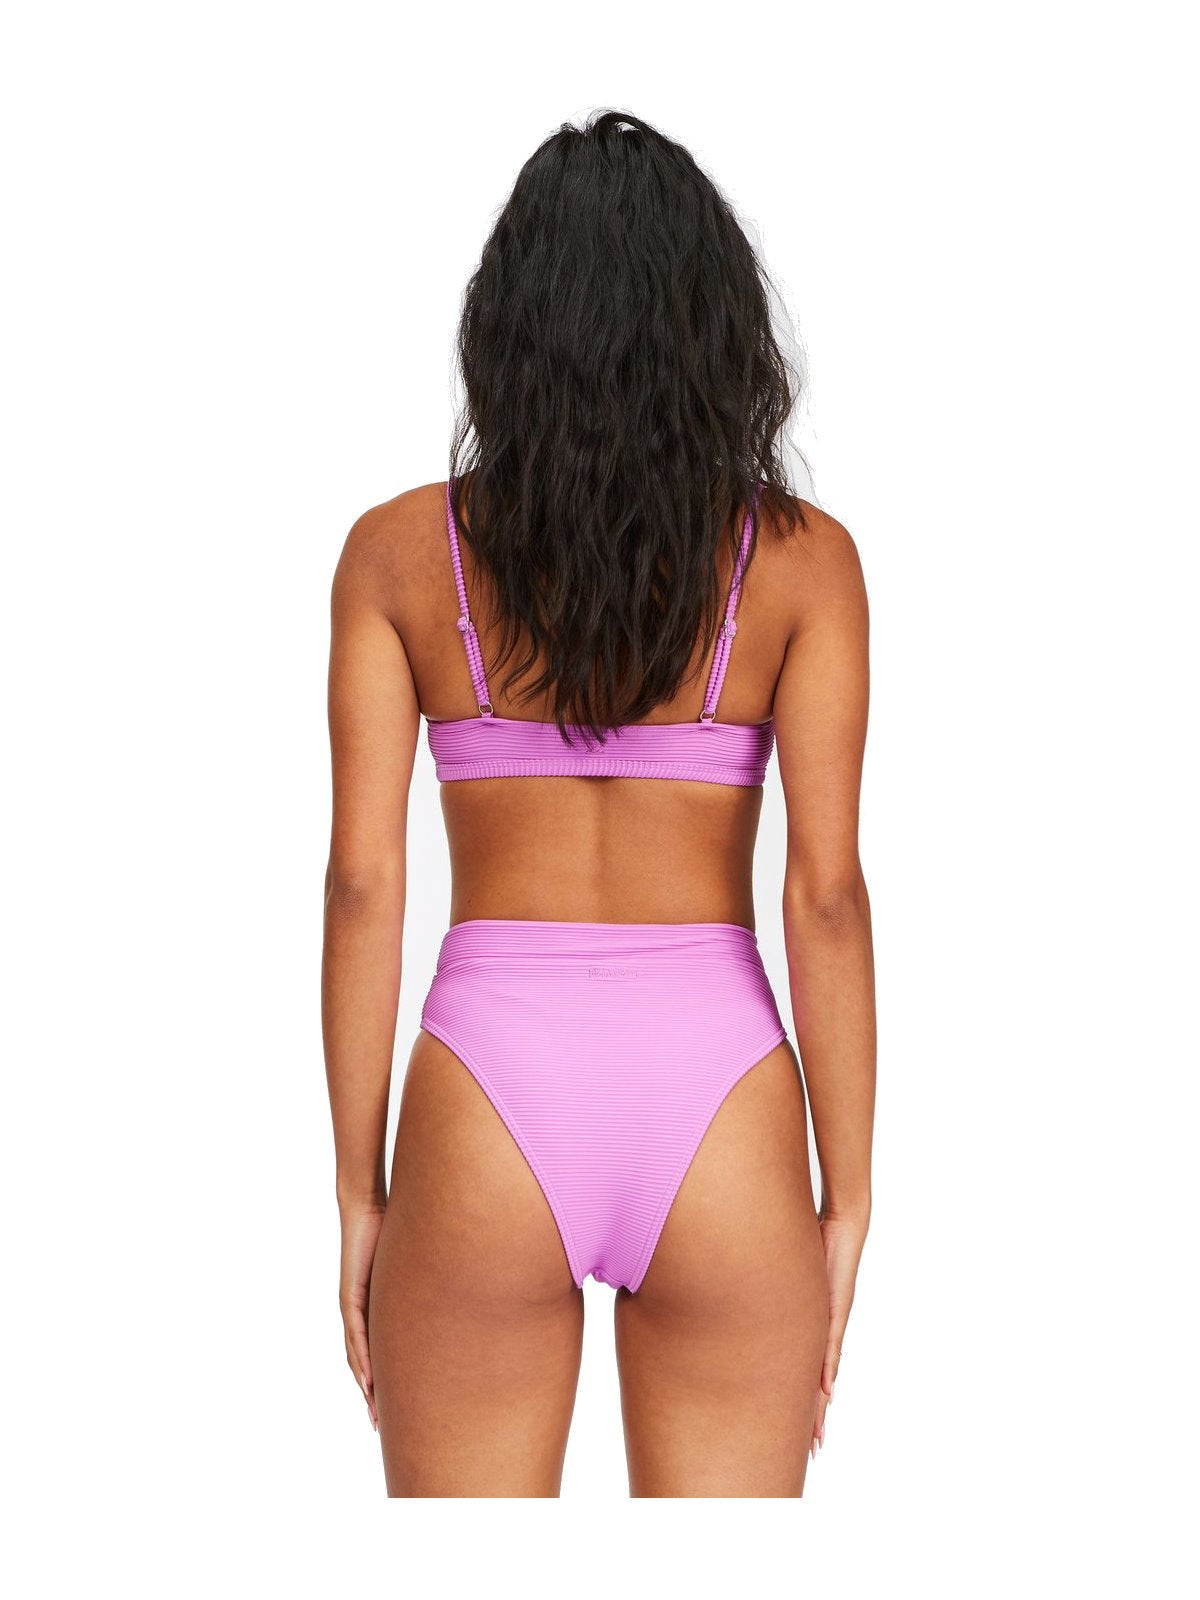 Dół bikini BILLABONG Tanlines Maui Rider - różowy